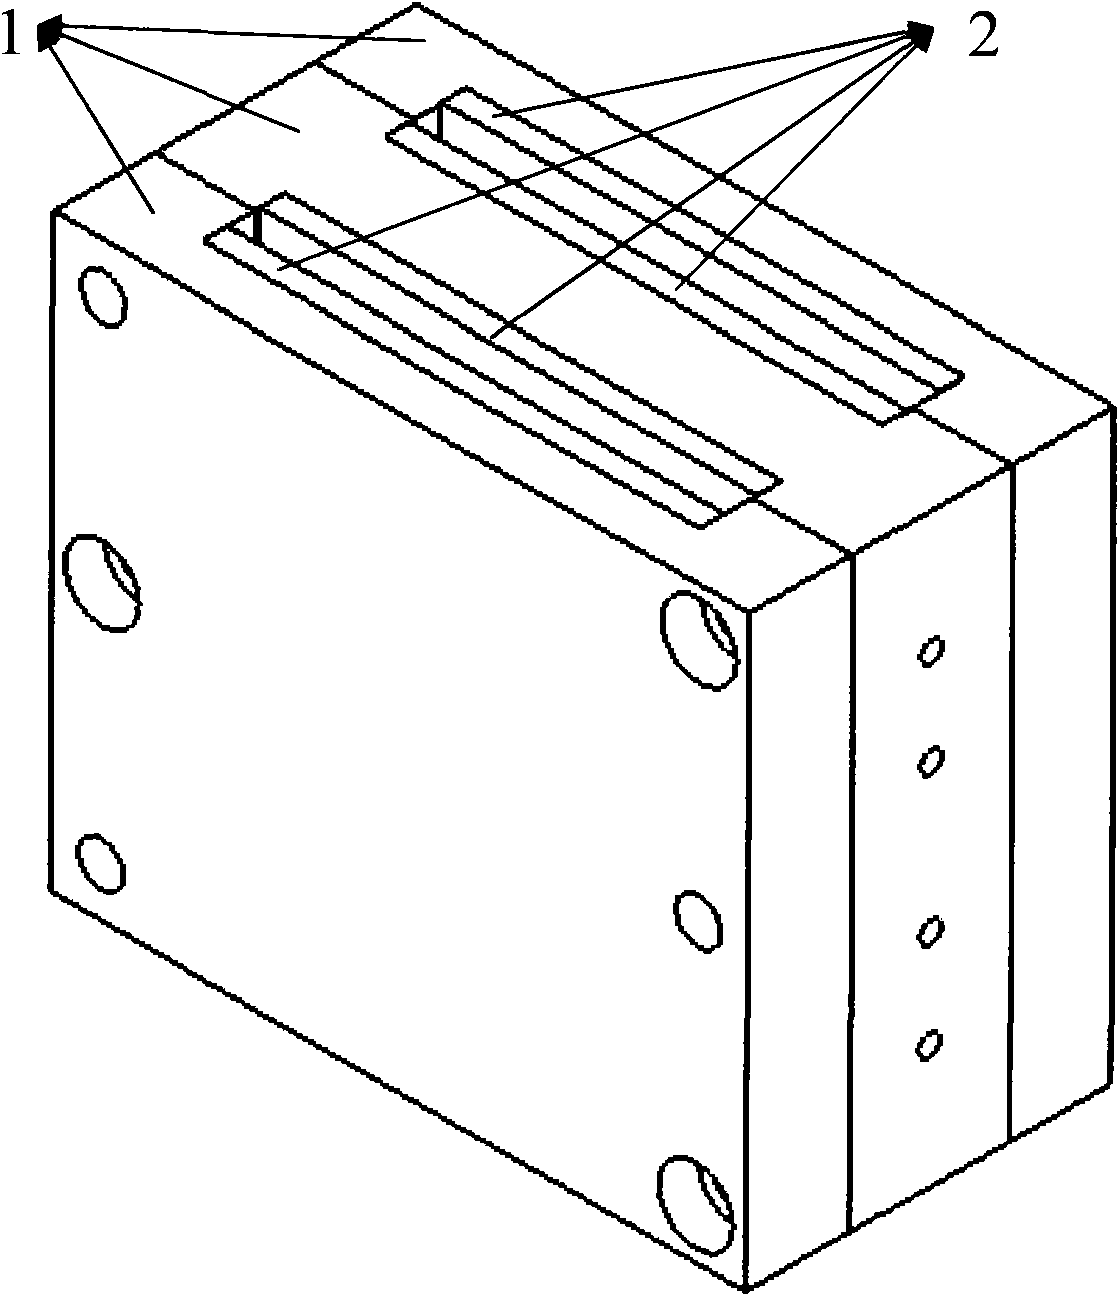 Square voice coil motor